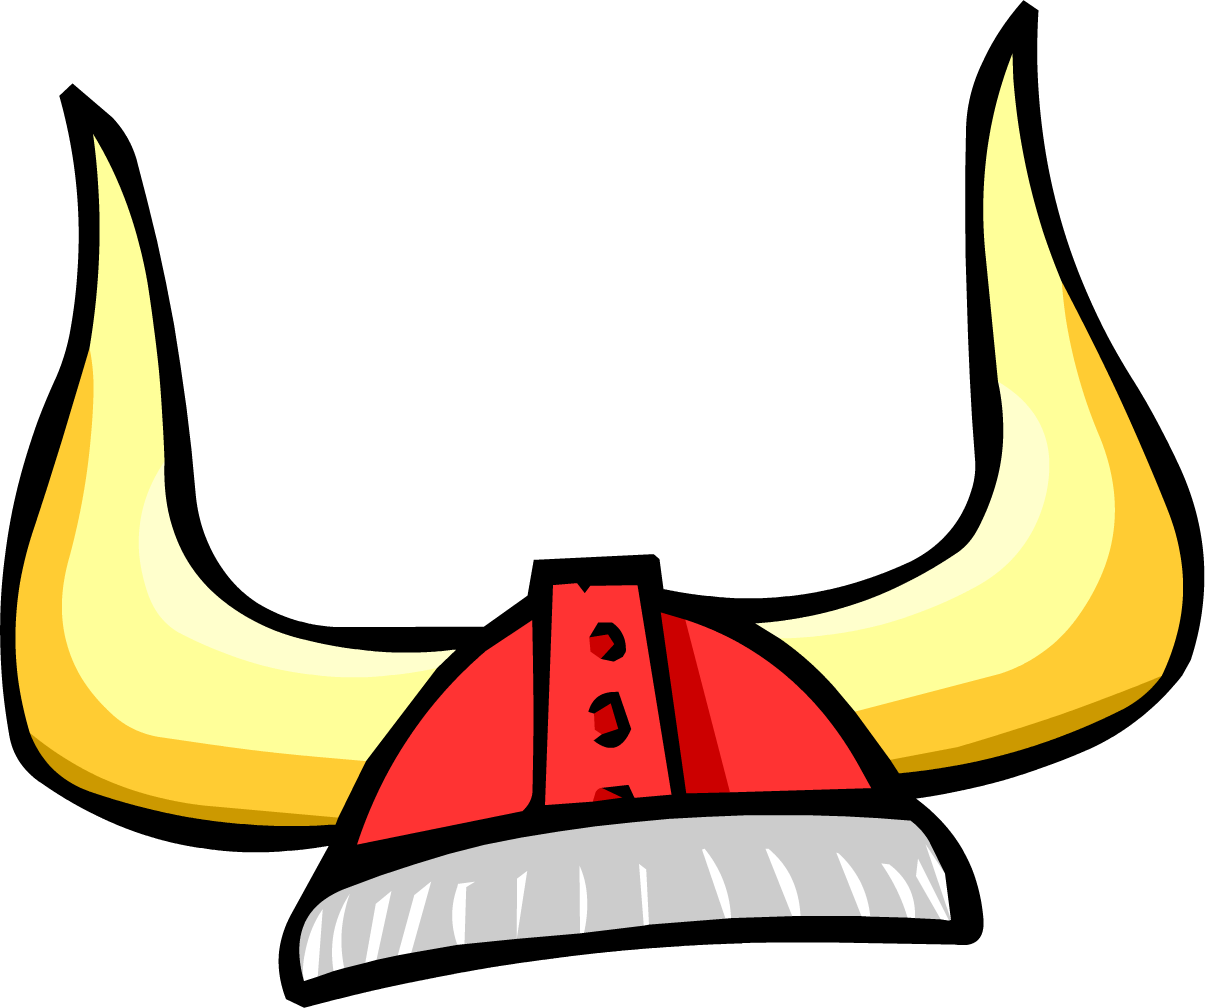 Helm viking